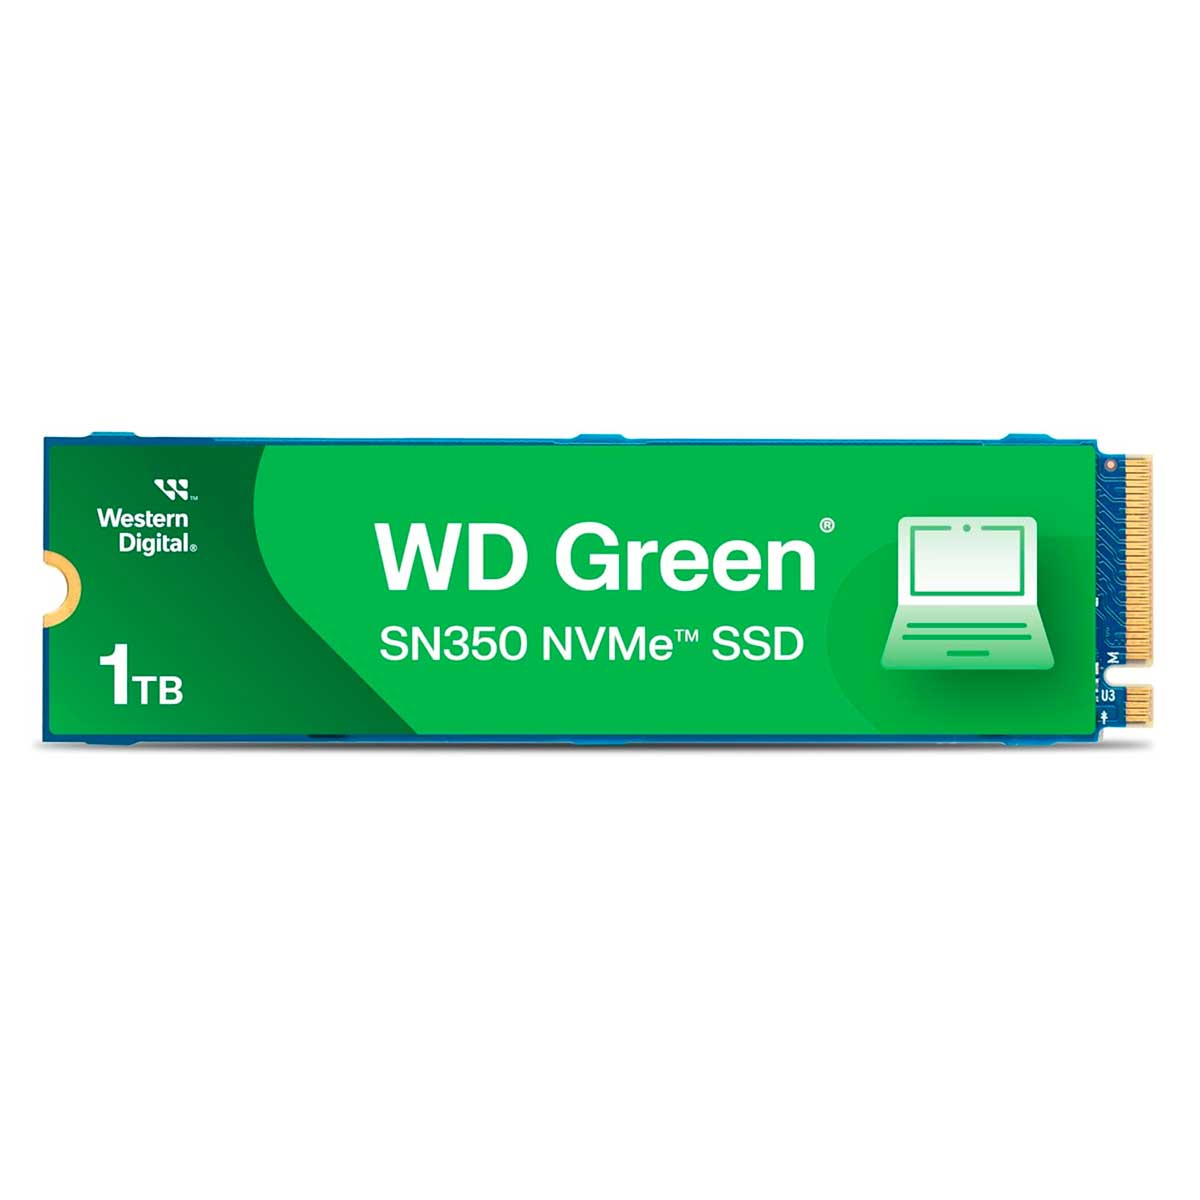 SSD WD Green SN350 1T M.2 2280 PCIe NVMe Leitura: 3200MB/s Gravação: 2500MB/s - WDS100T3G0C